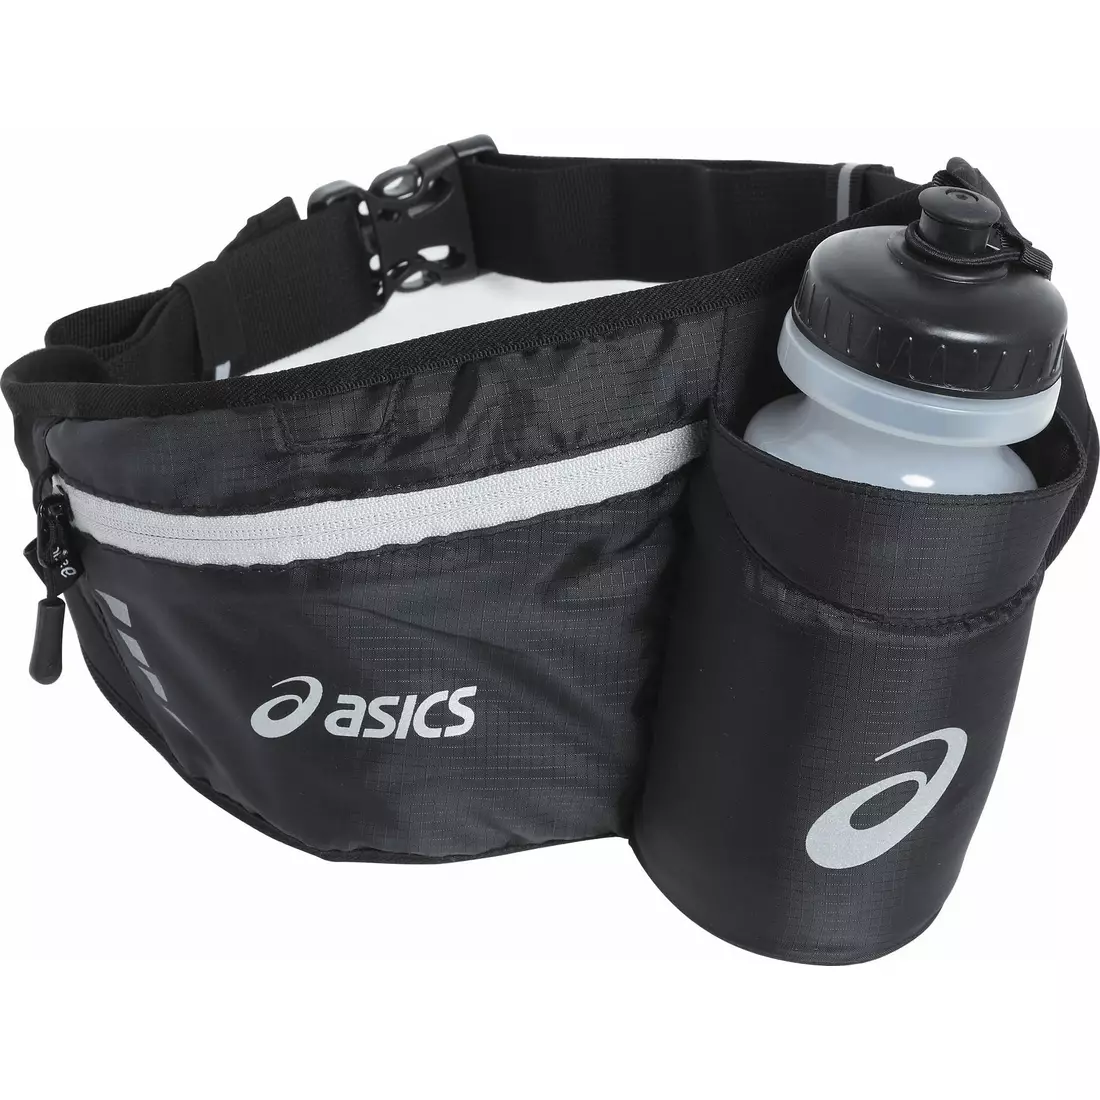 ASICS 611836-9090 – running belt with water bottle, running waistpack - color: Black